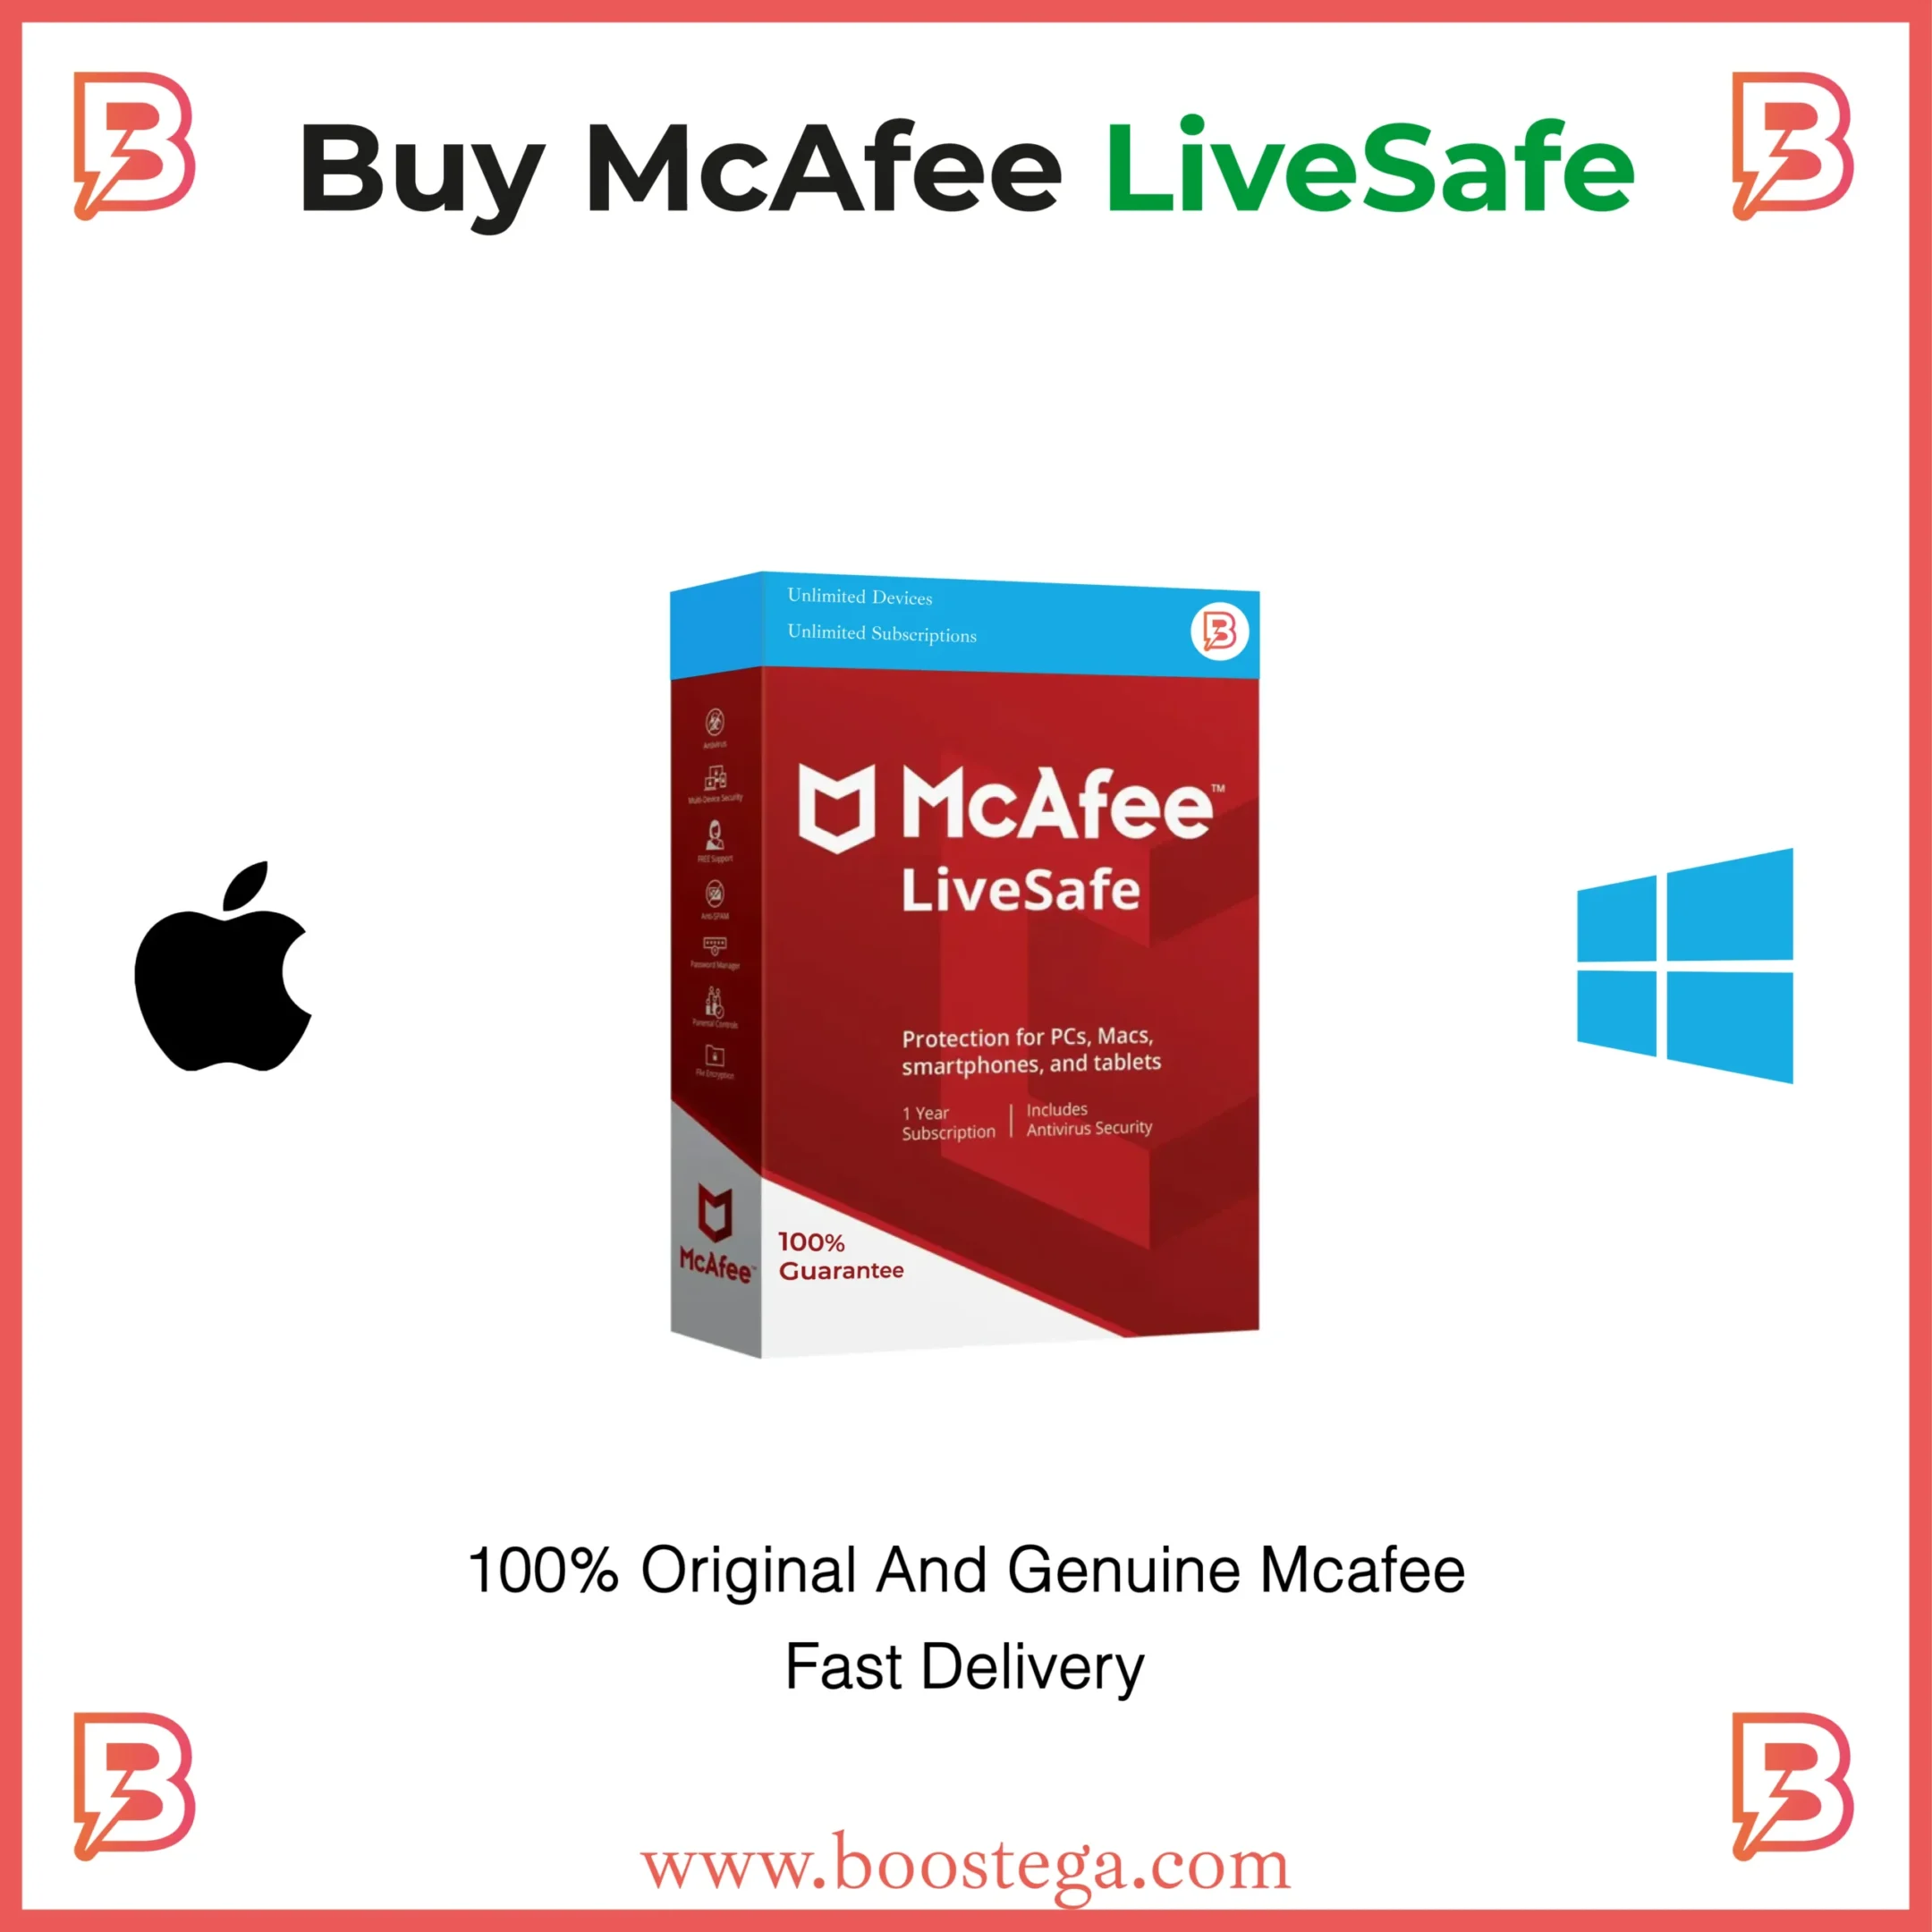 Buy mcafee livesafe by boostega